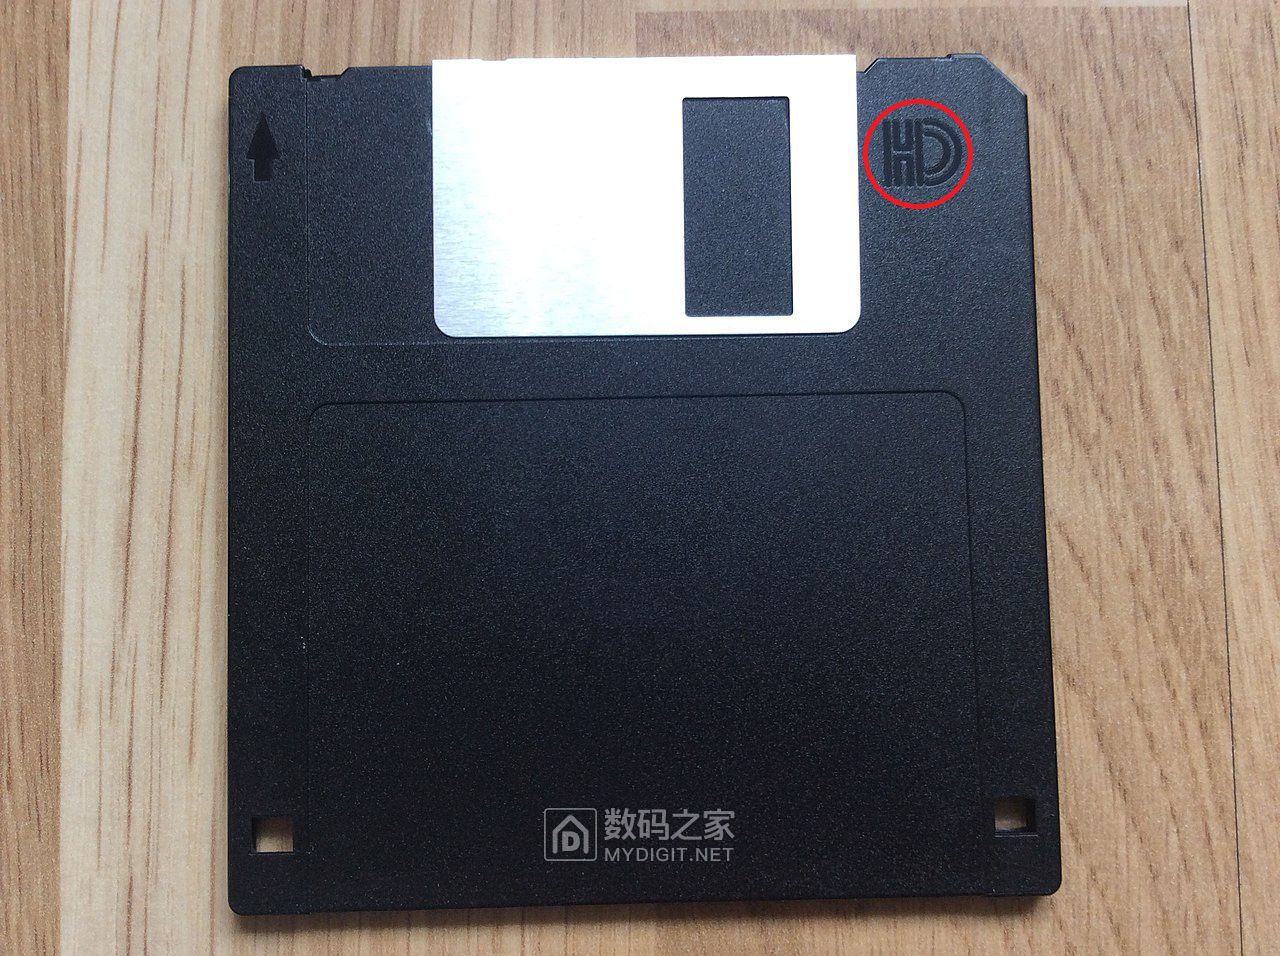 1280px-Floppy_Disk_HD.jpg